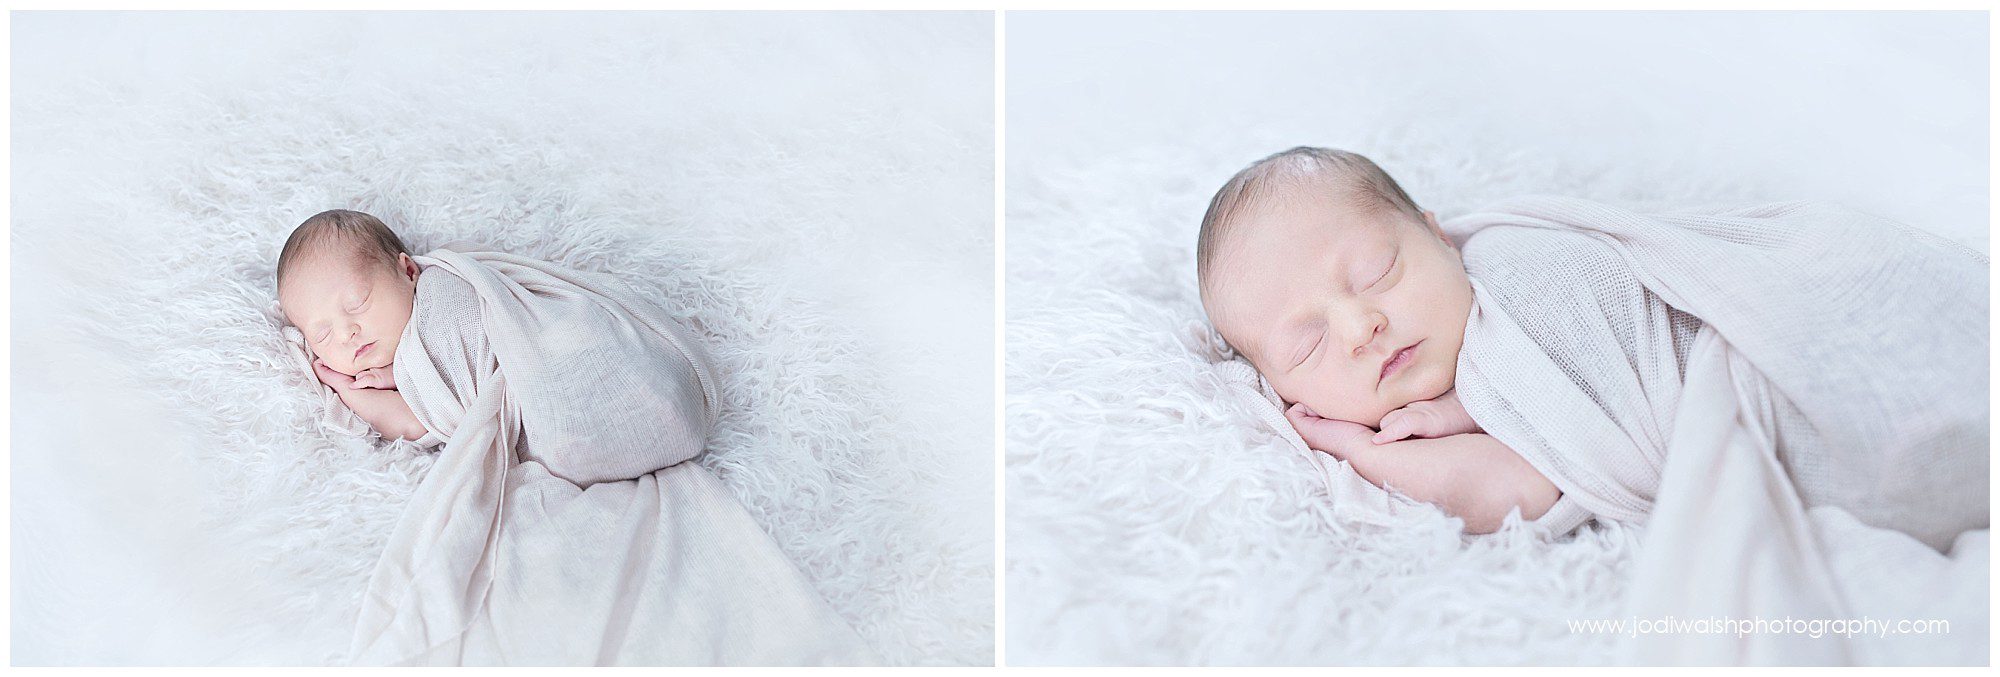 sleeping newborn baby girl in white wrap on white fur